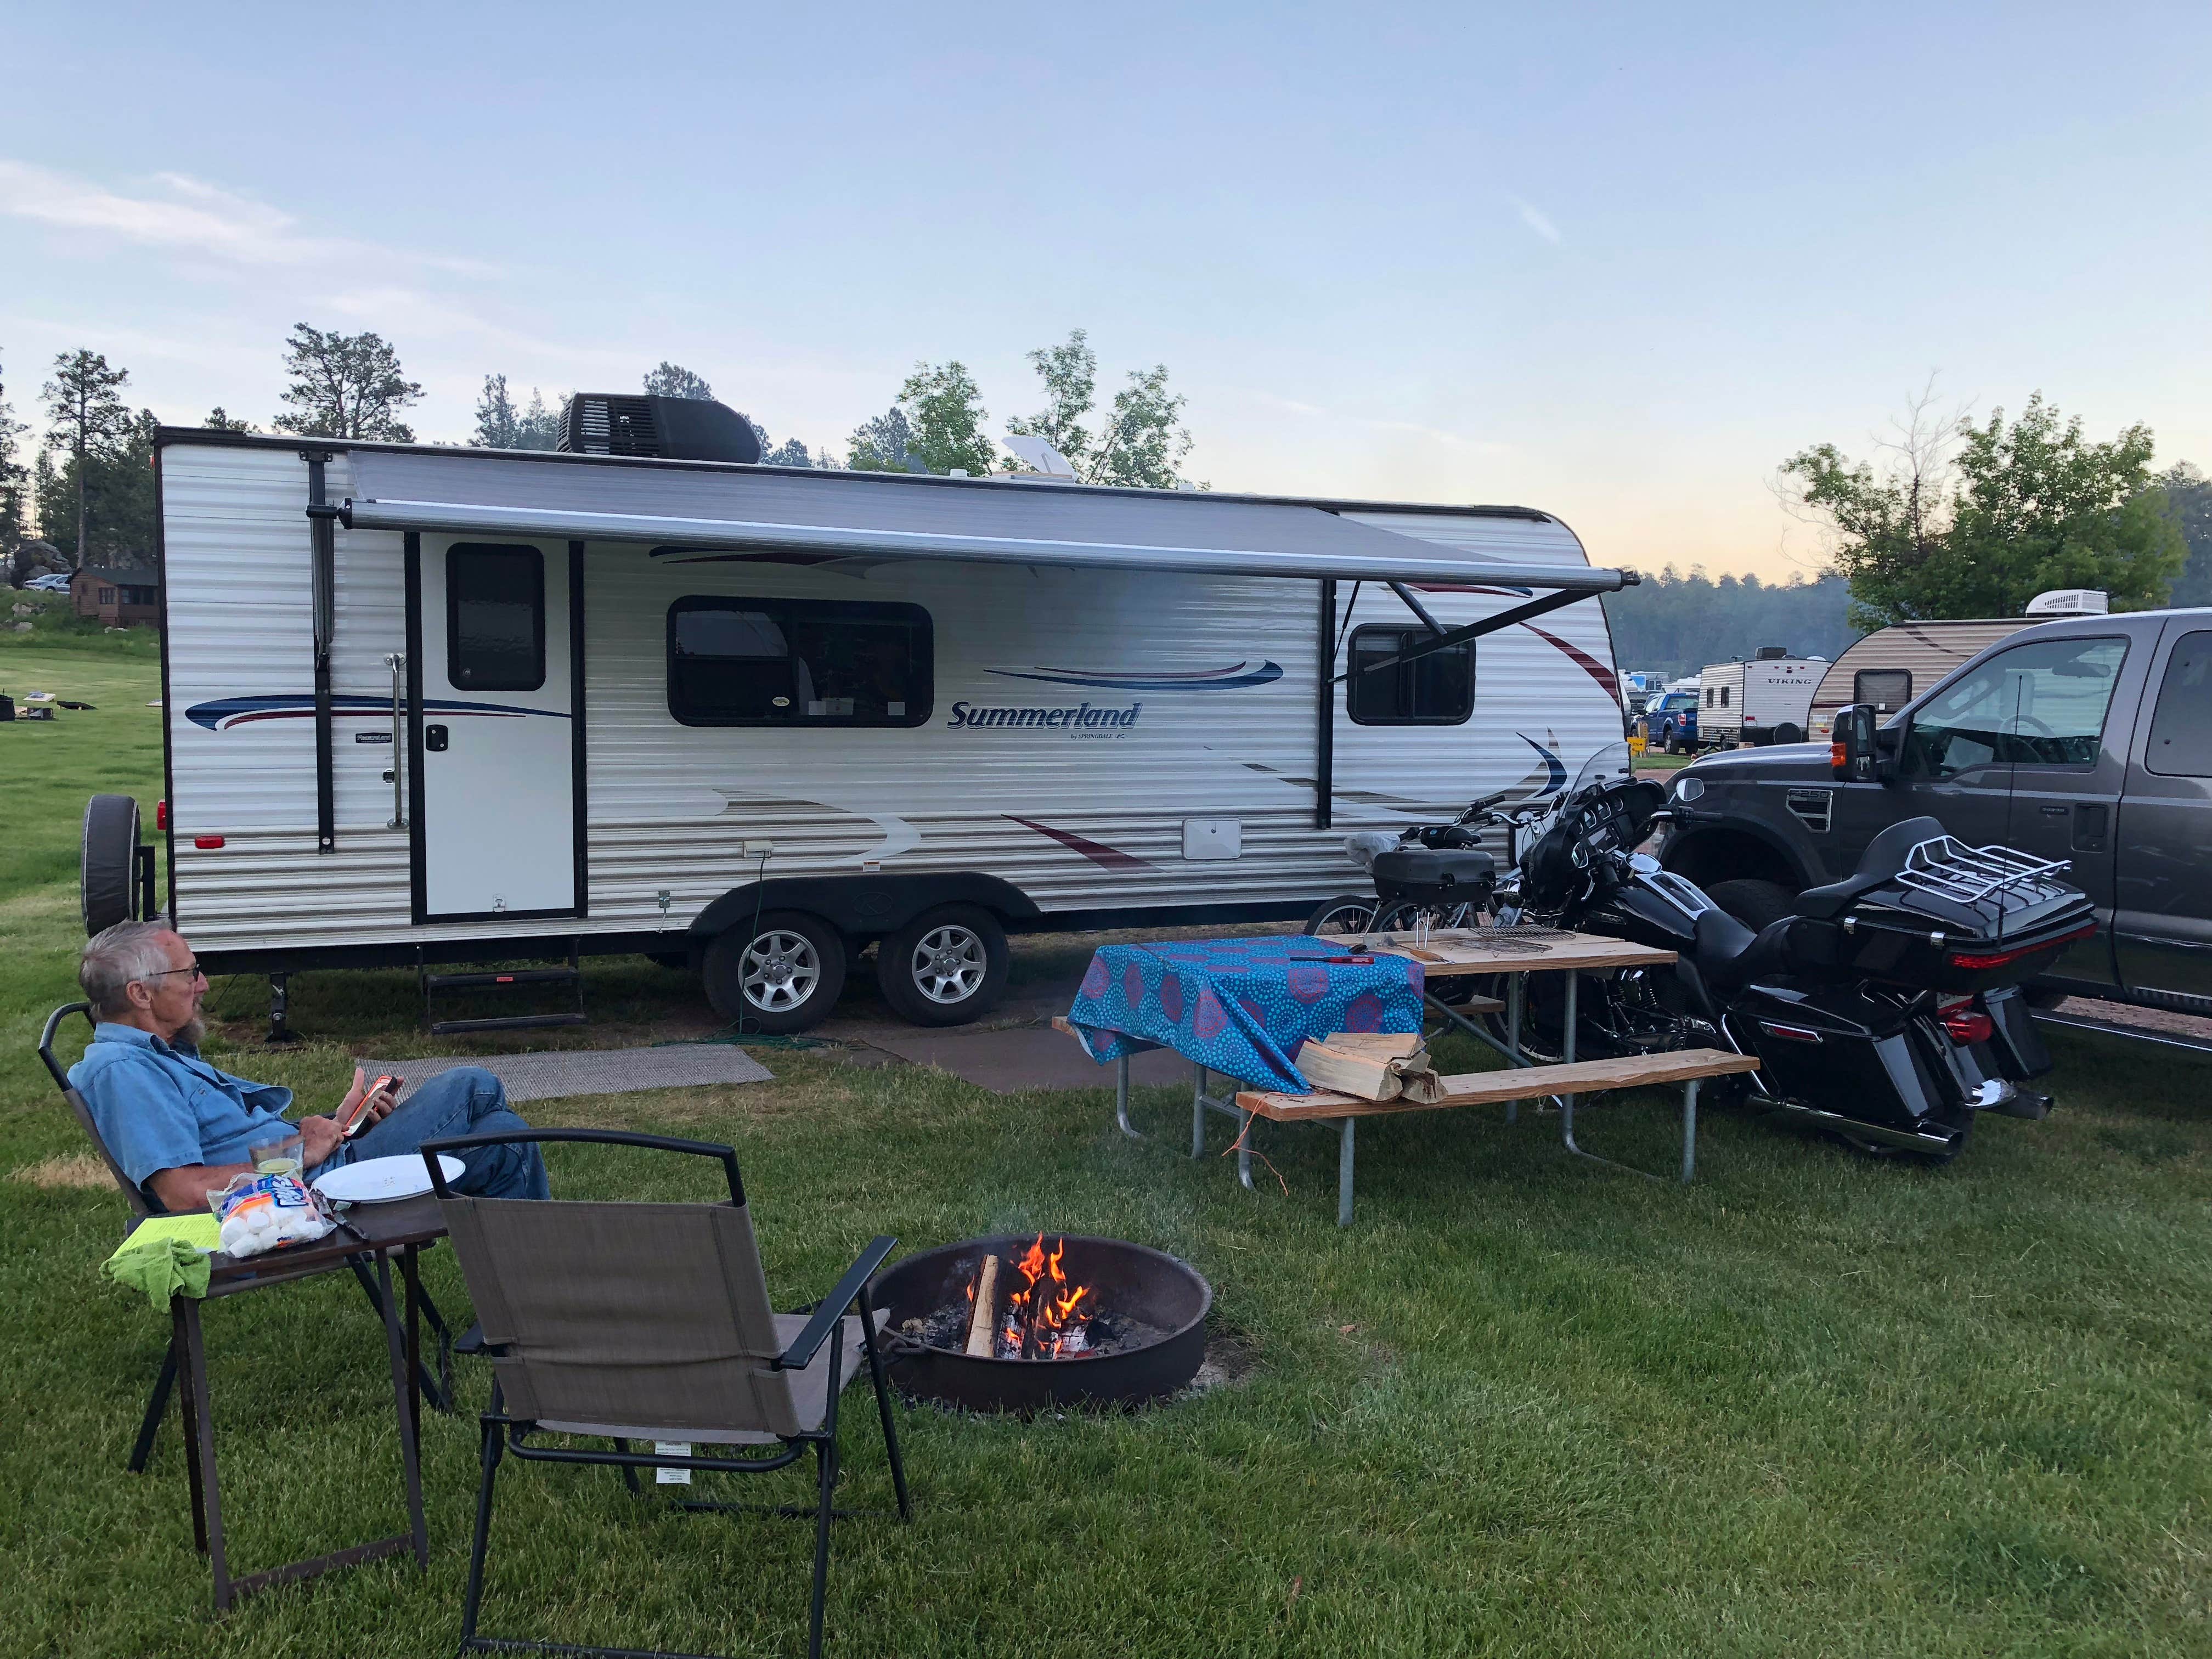 A campsite